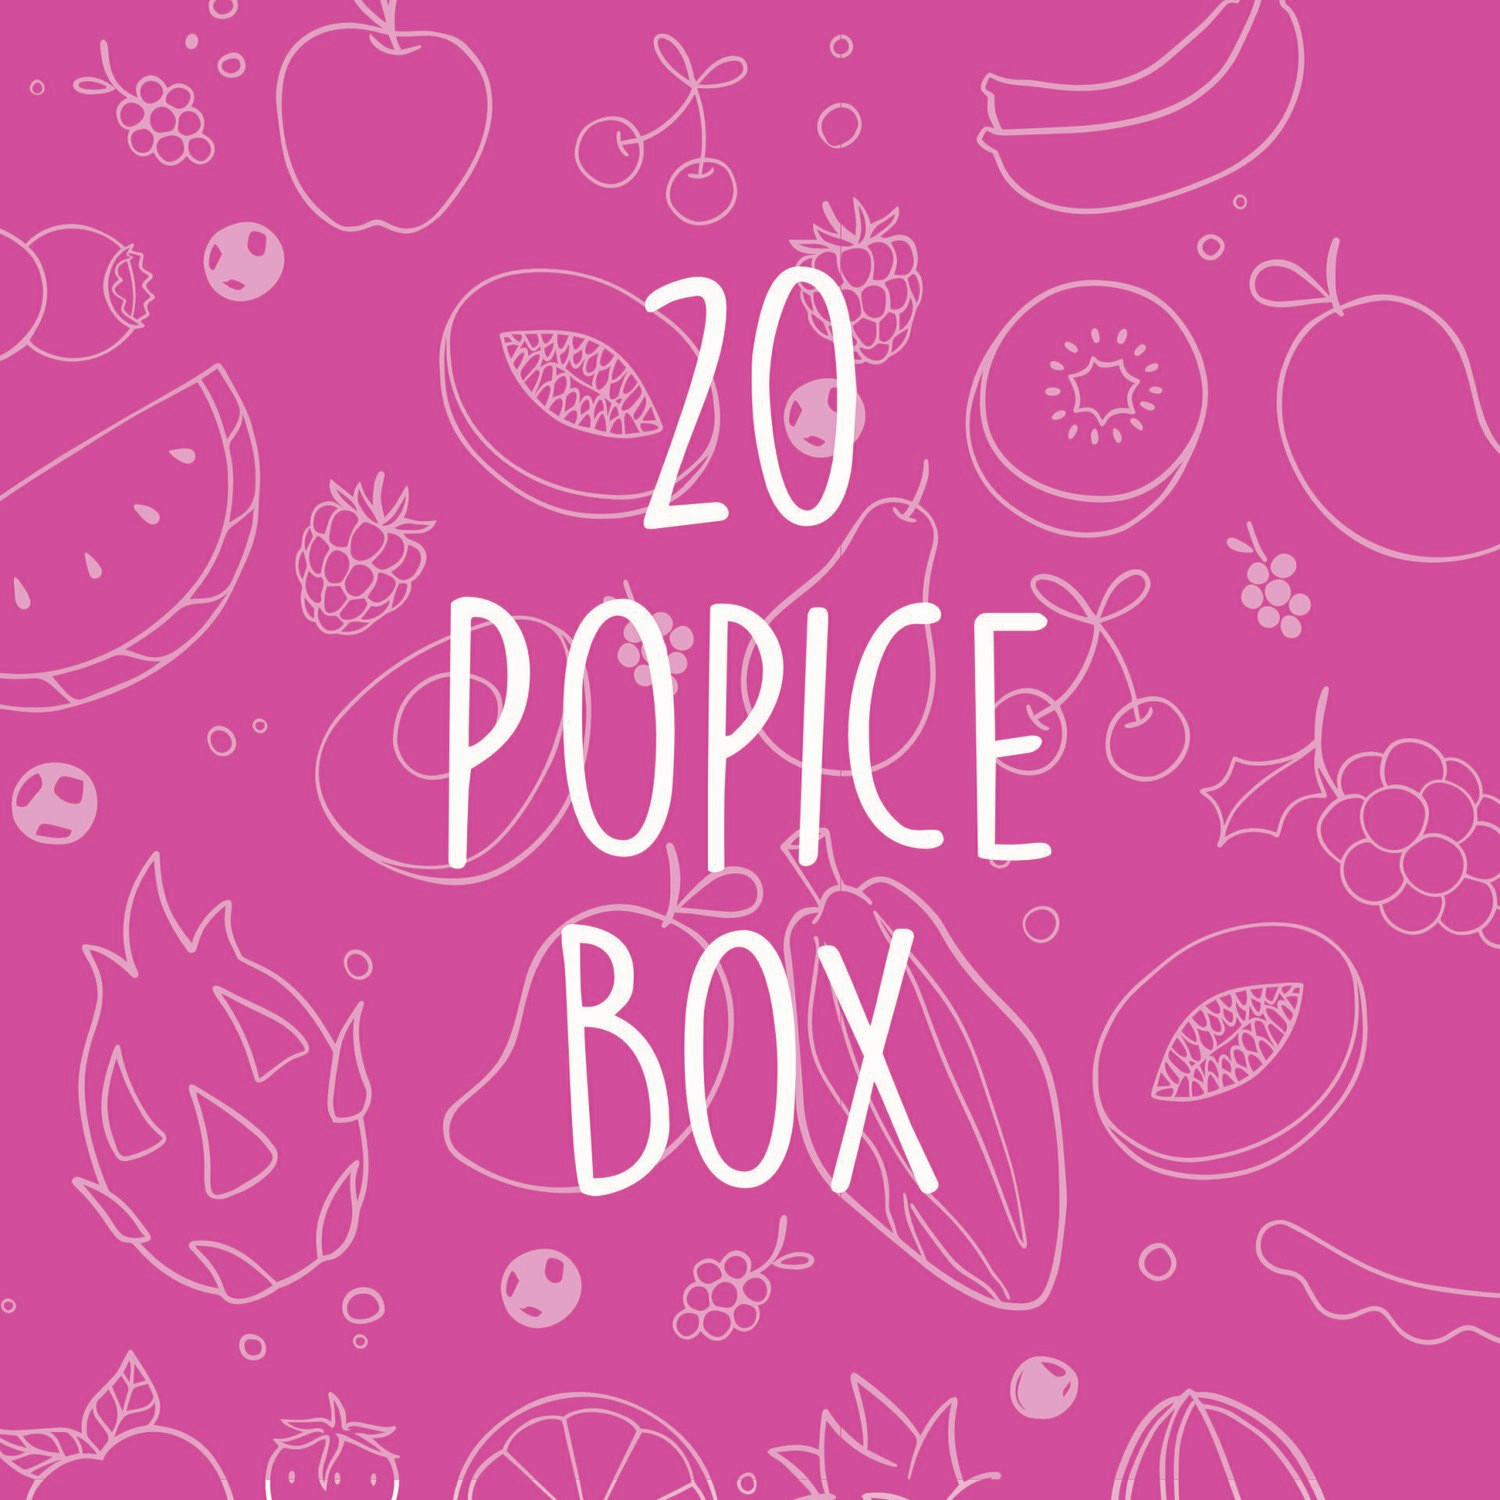 20er Popice Box